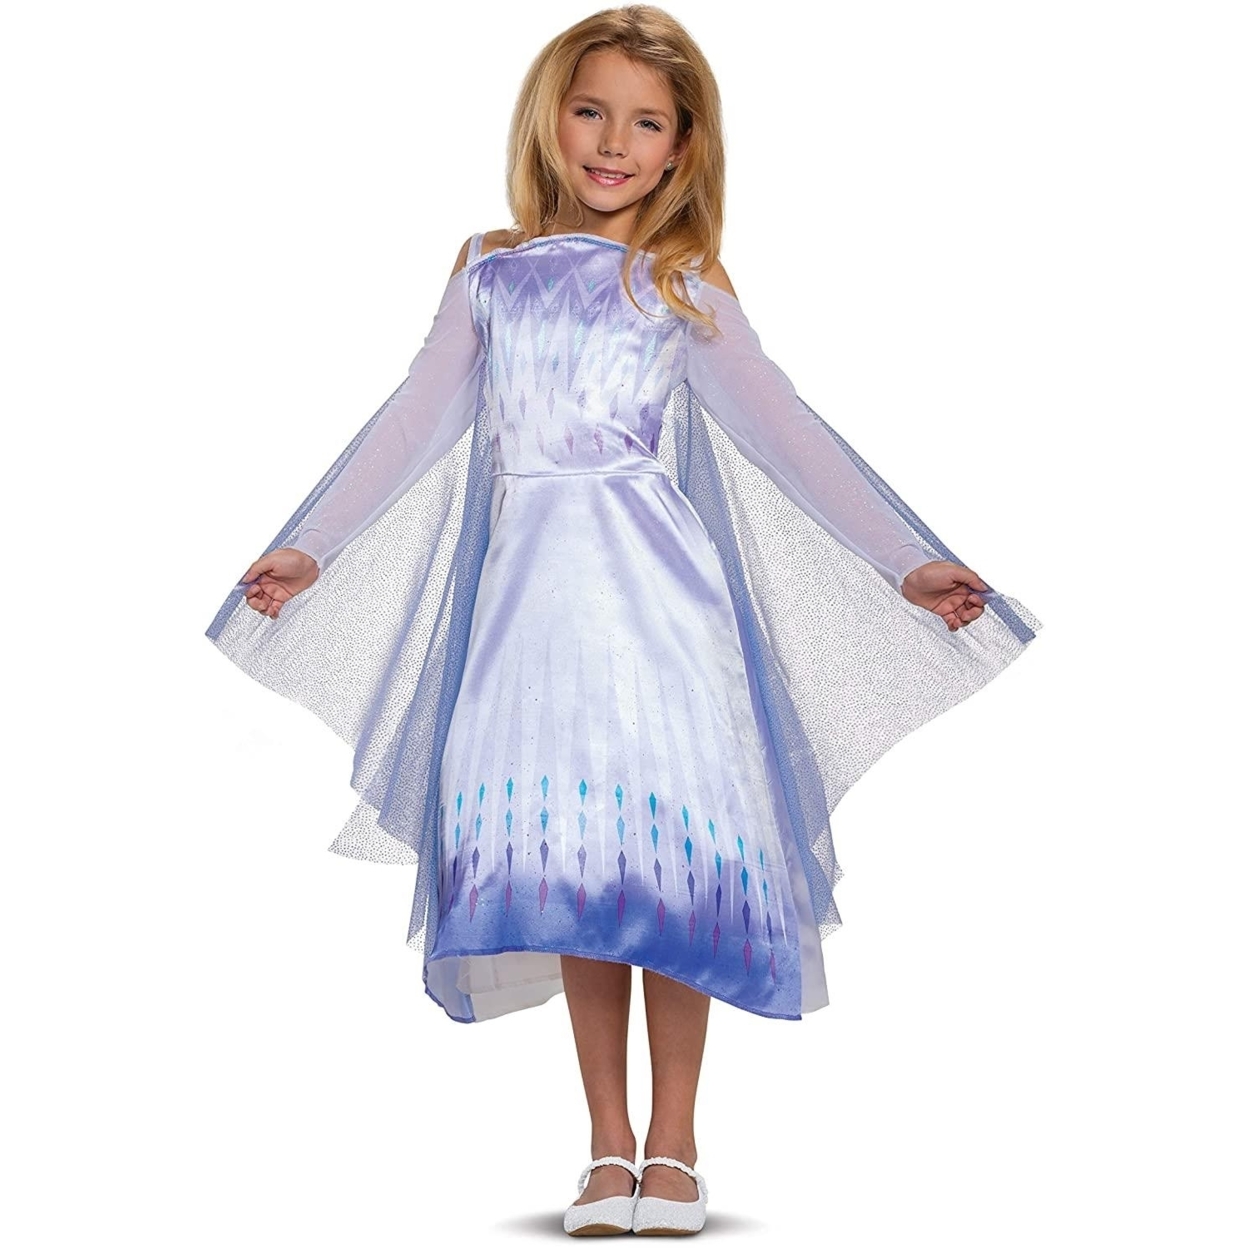 Elsa Classic Girls Size M 7/8 Costume Disney Frozen 2 Snow Queen Dress Cape Disguise